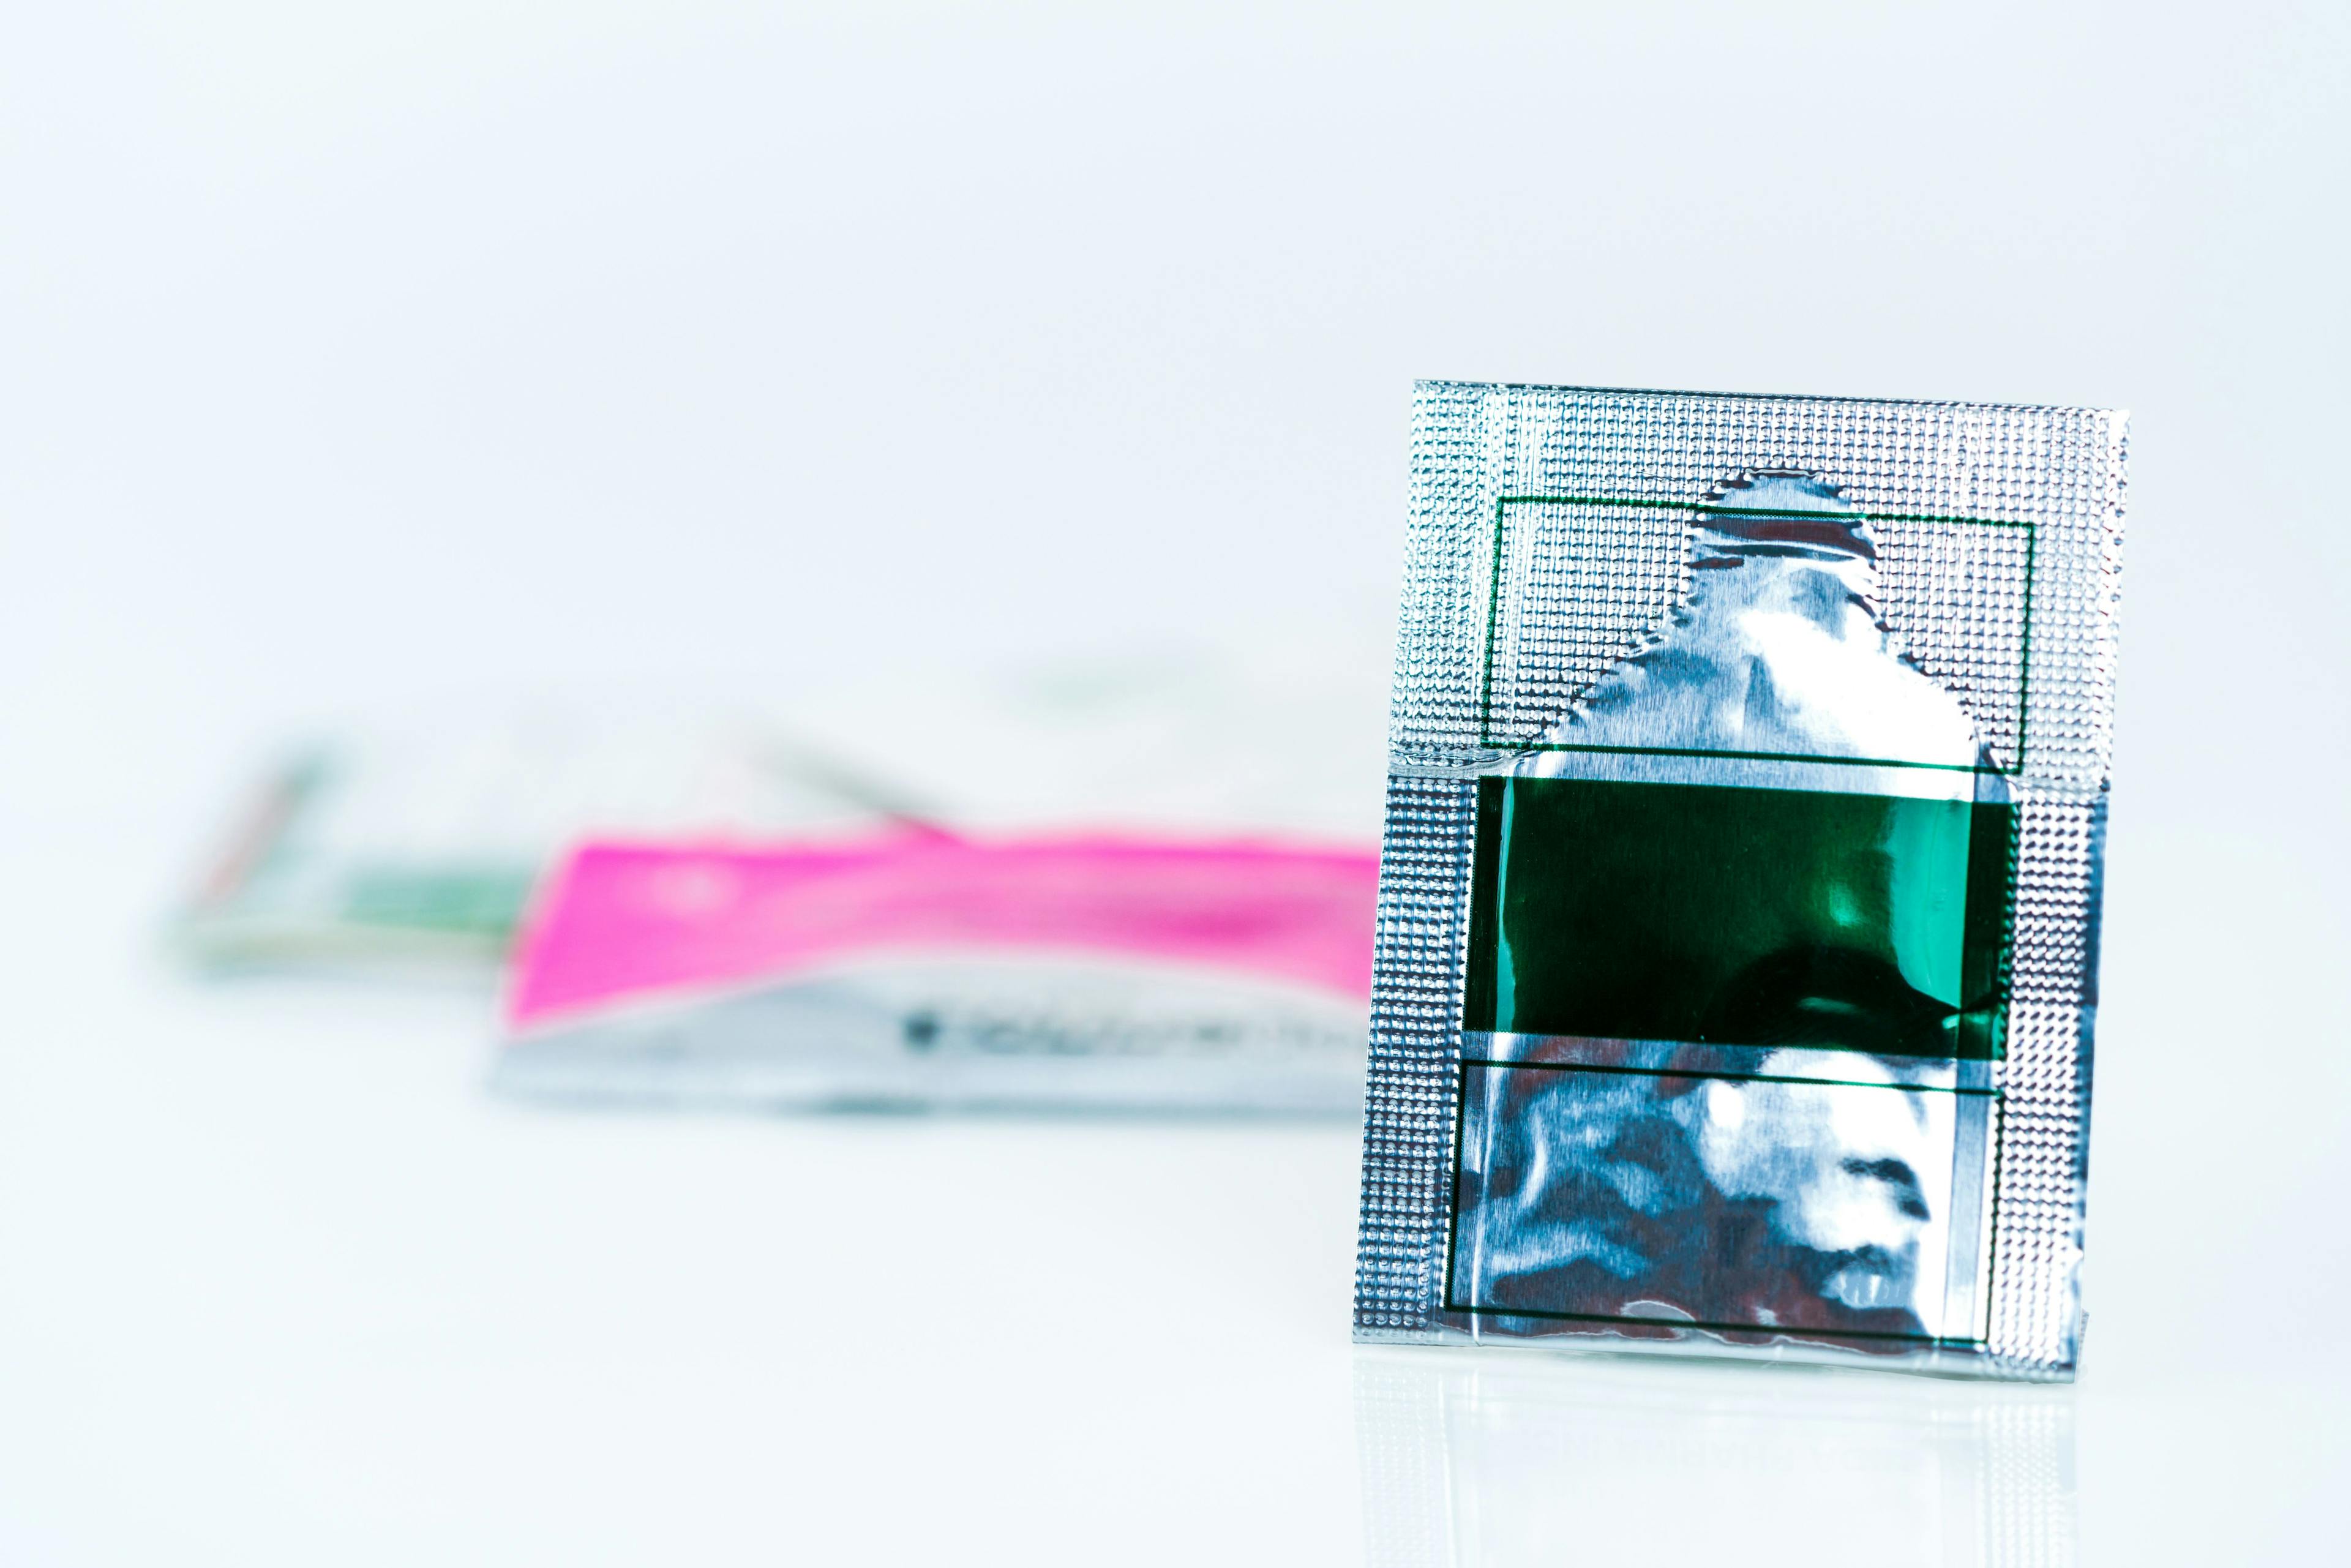 Mild steroid oral paste in aluminium foil sachet on blur background of sachets | Artinun - stock.adobe.com